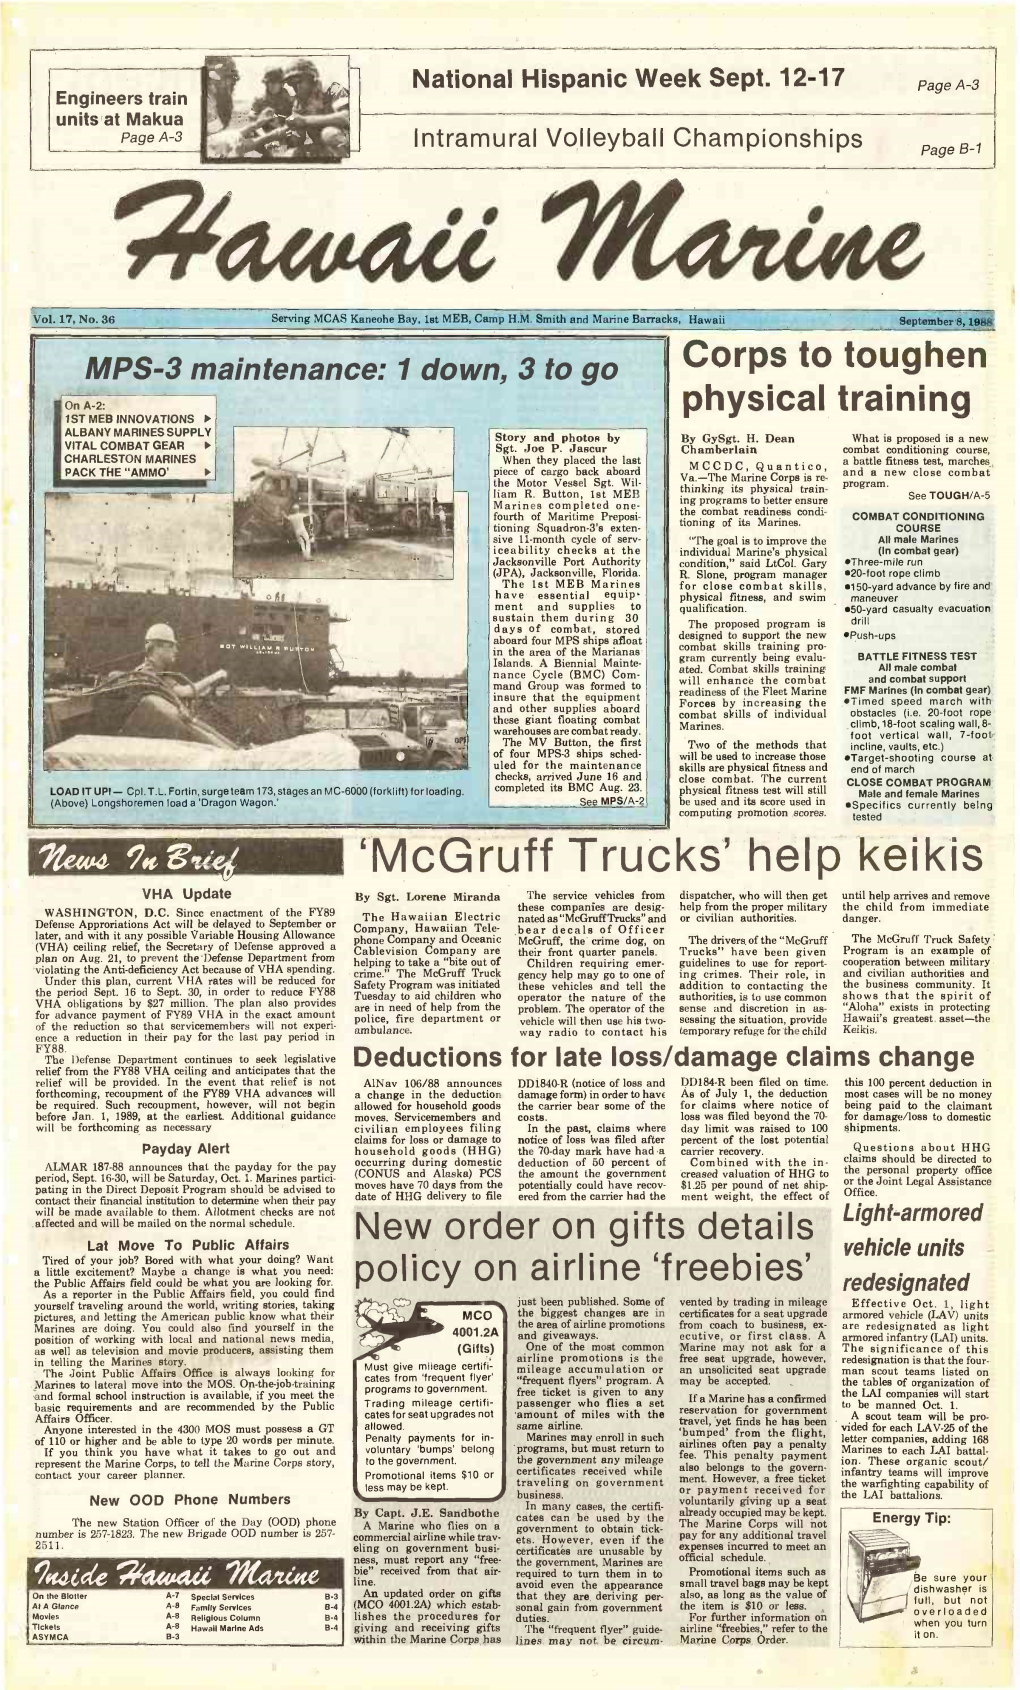 Mcgruff Trucks' Help Keikis VHA Update by Sgt